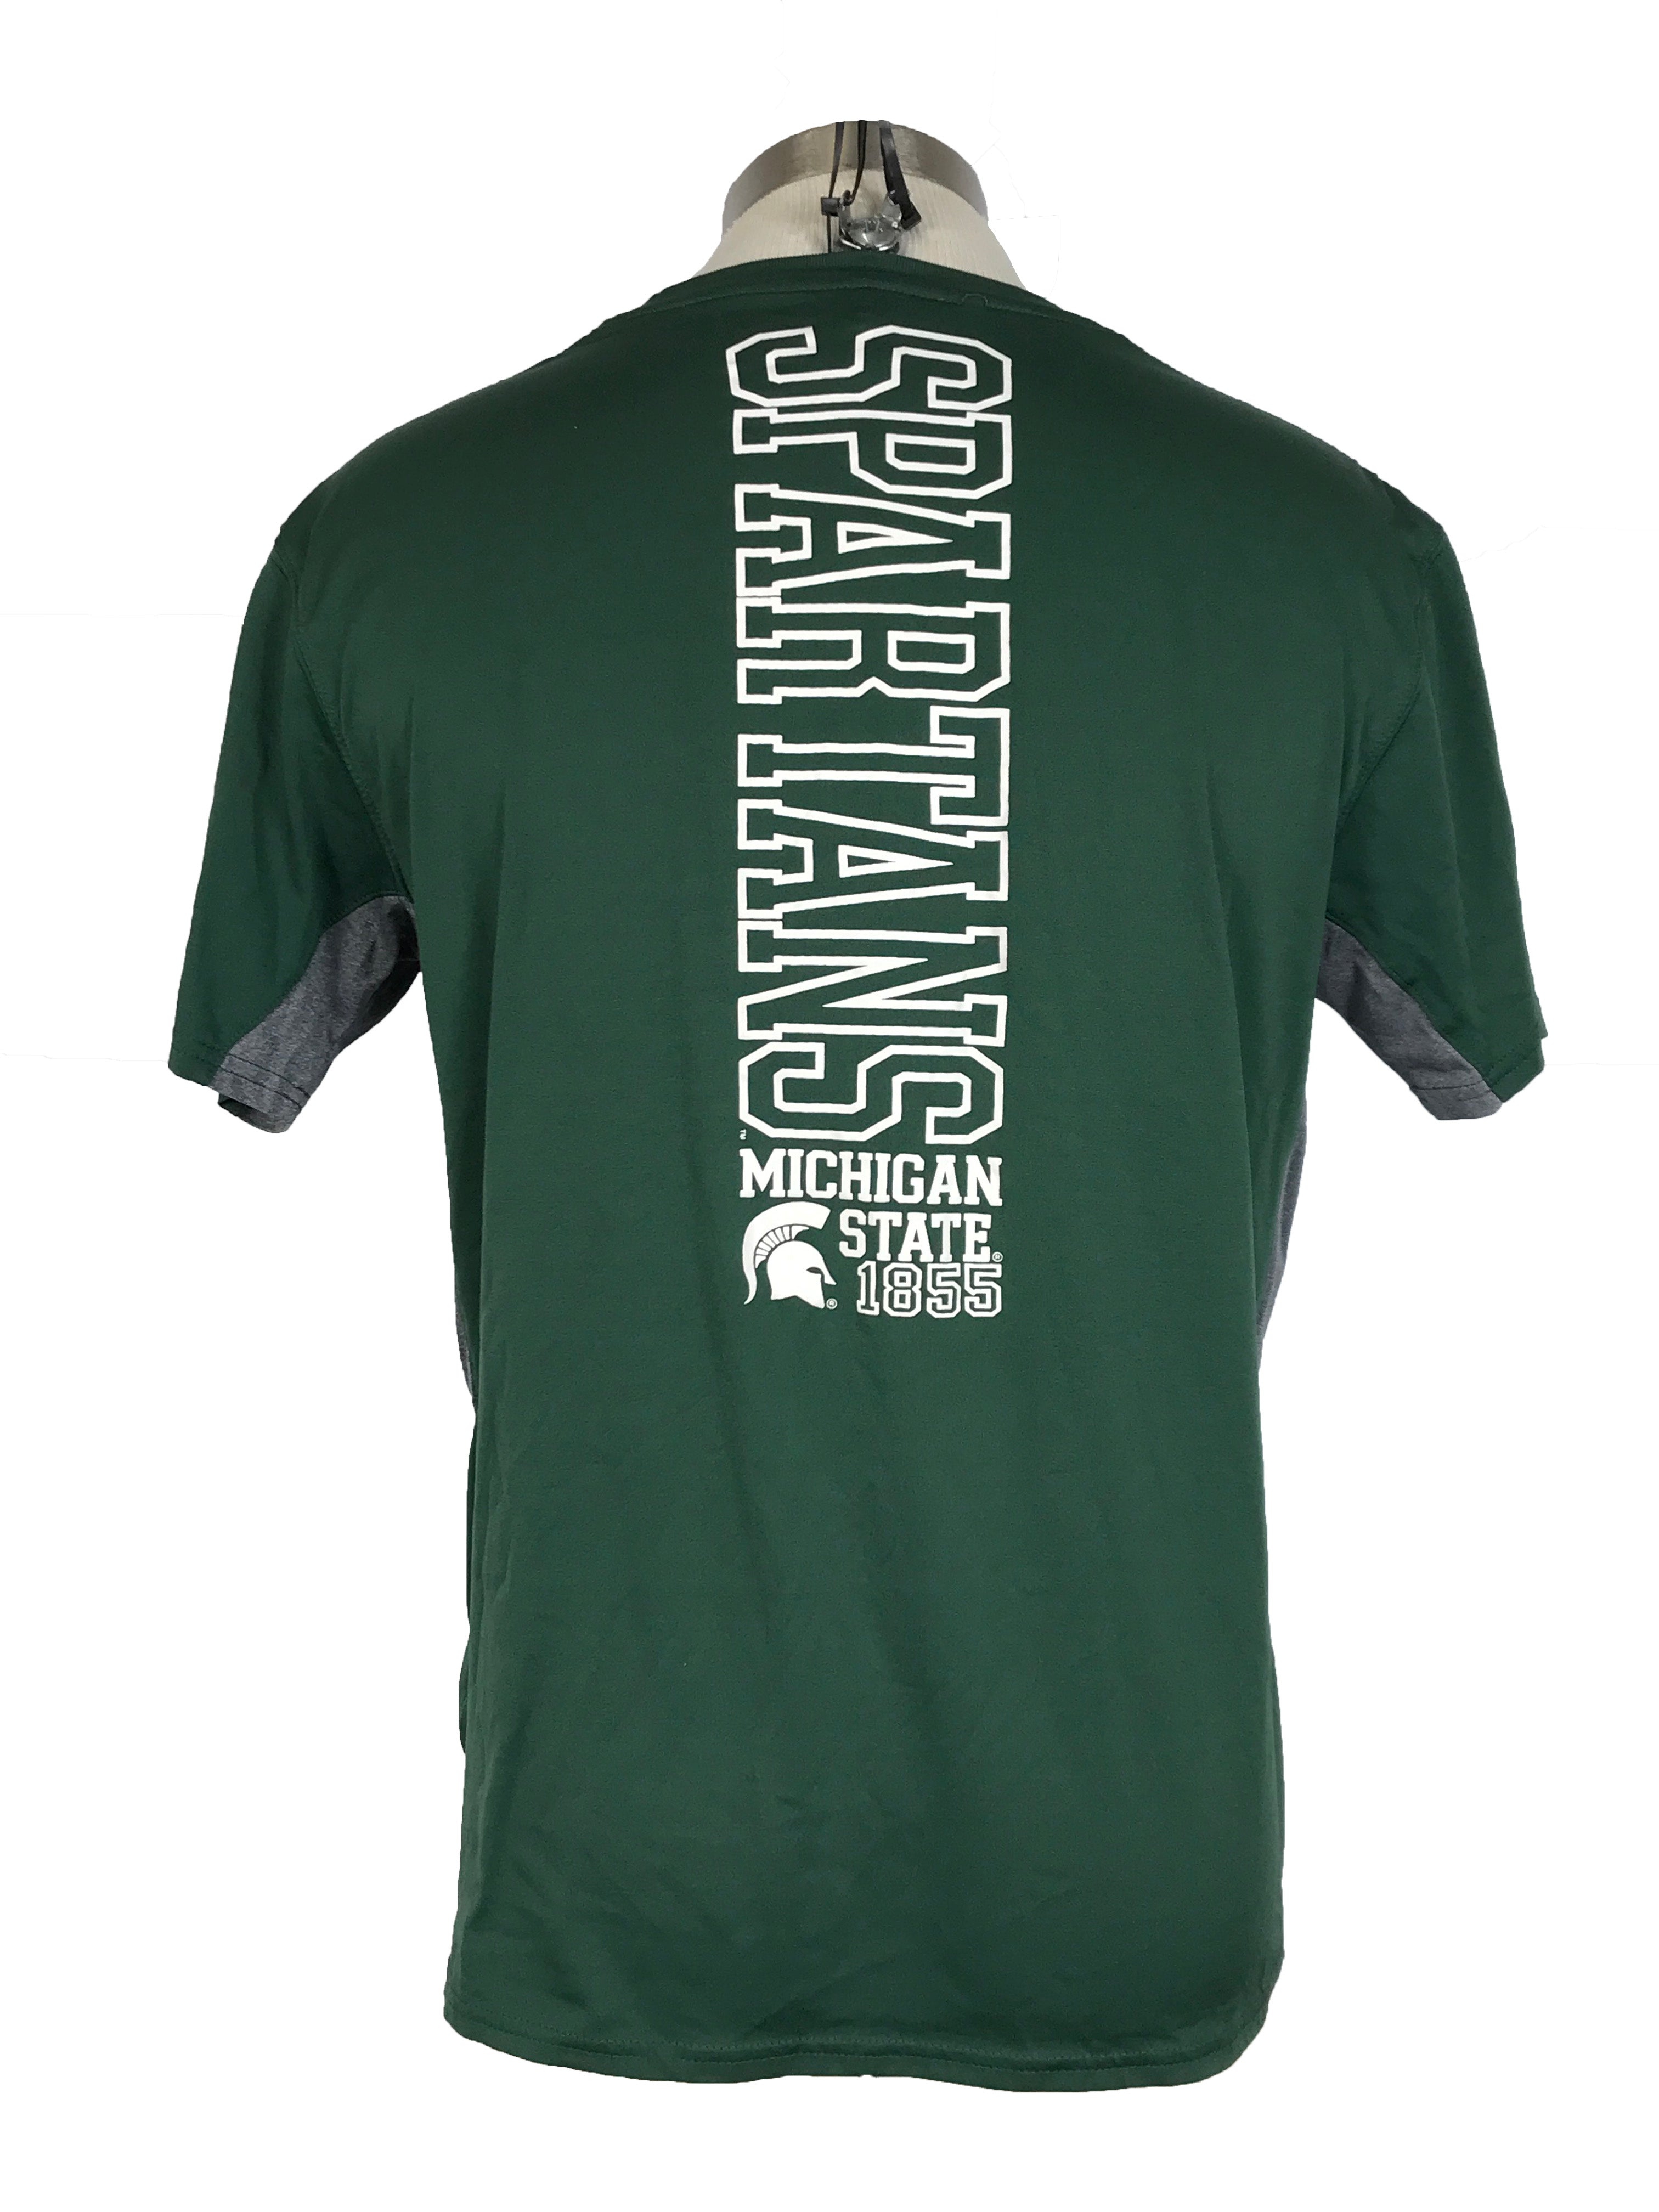 Michigan State University Green T-Shirt Men's Size L